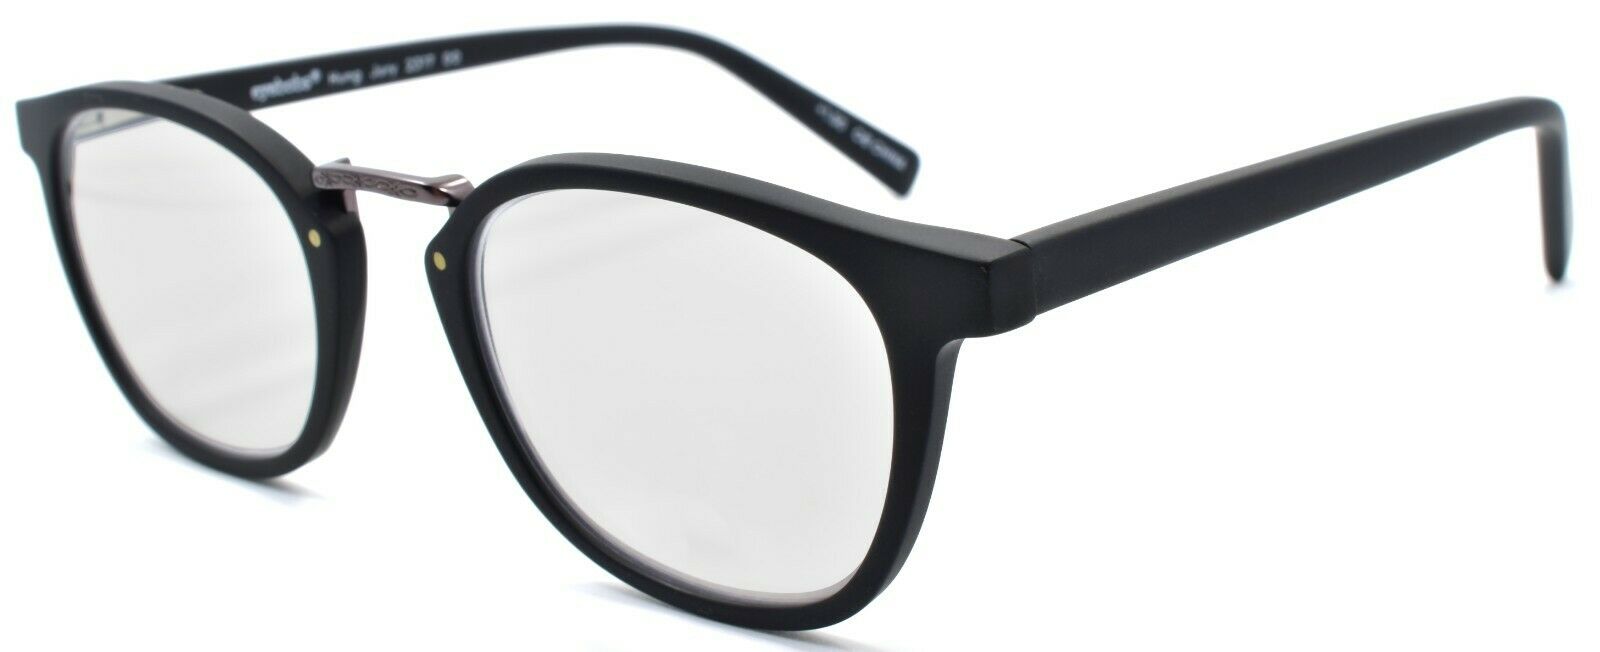 1-Eyebobs Hung Jury 2317 00 Unisex Reading Glasses Matte Black +2.00-842446037574-IKSpecs